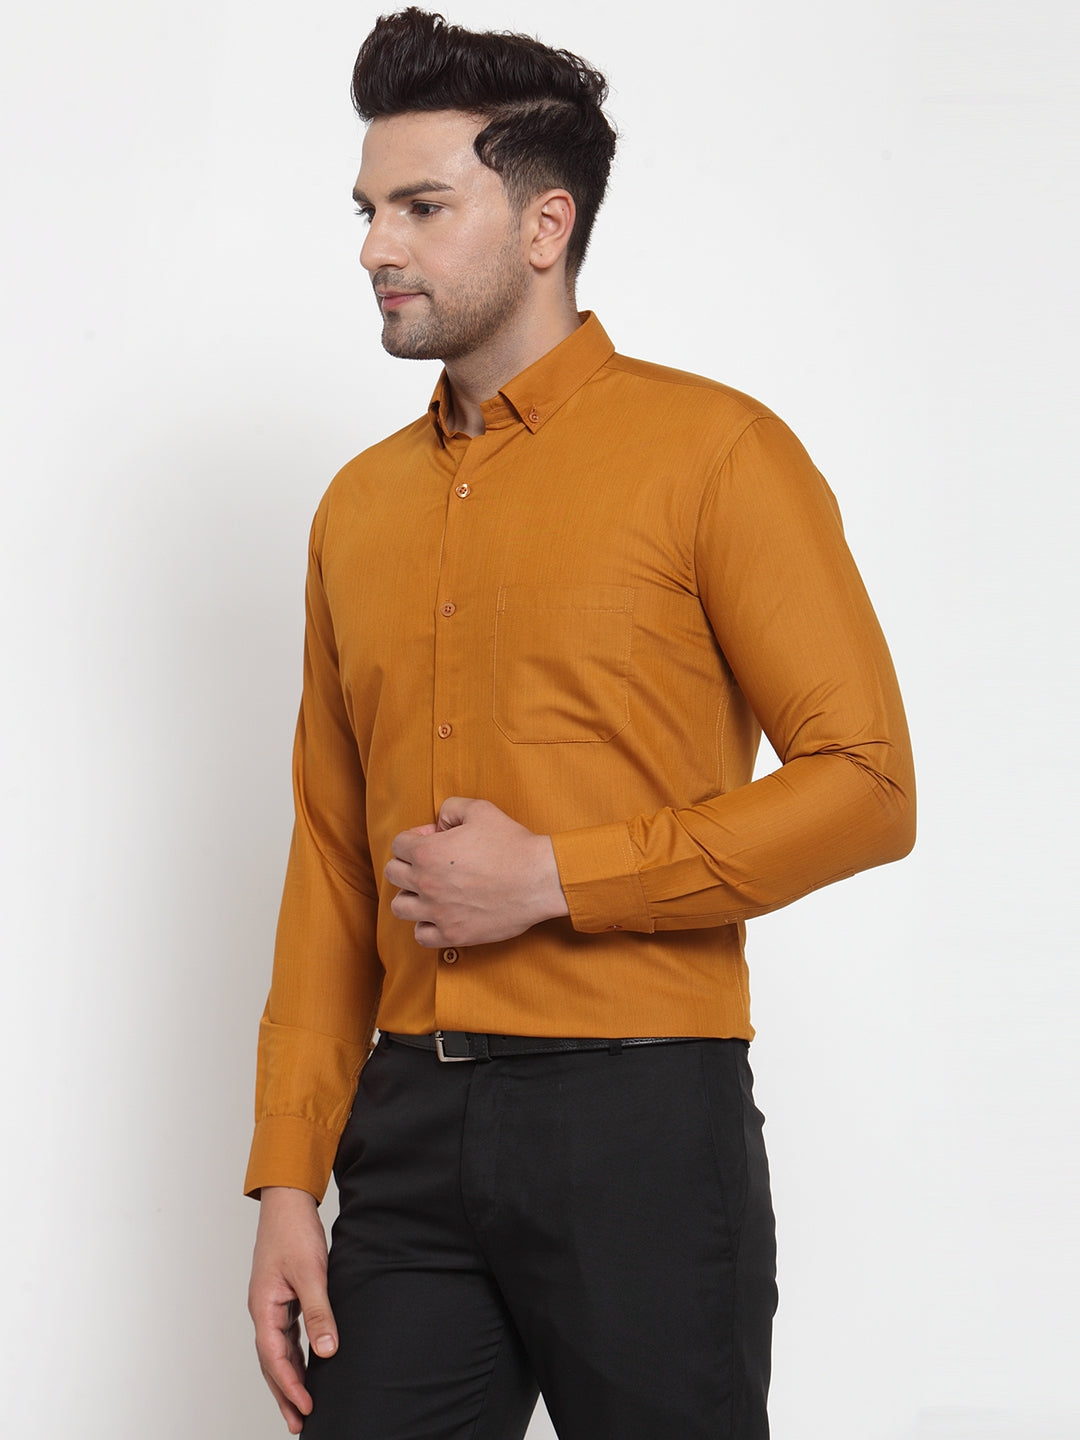 Men's Yellow Cotton Solid Button Down Formal Shirts ( SF 713Mustard ) - Jainish